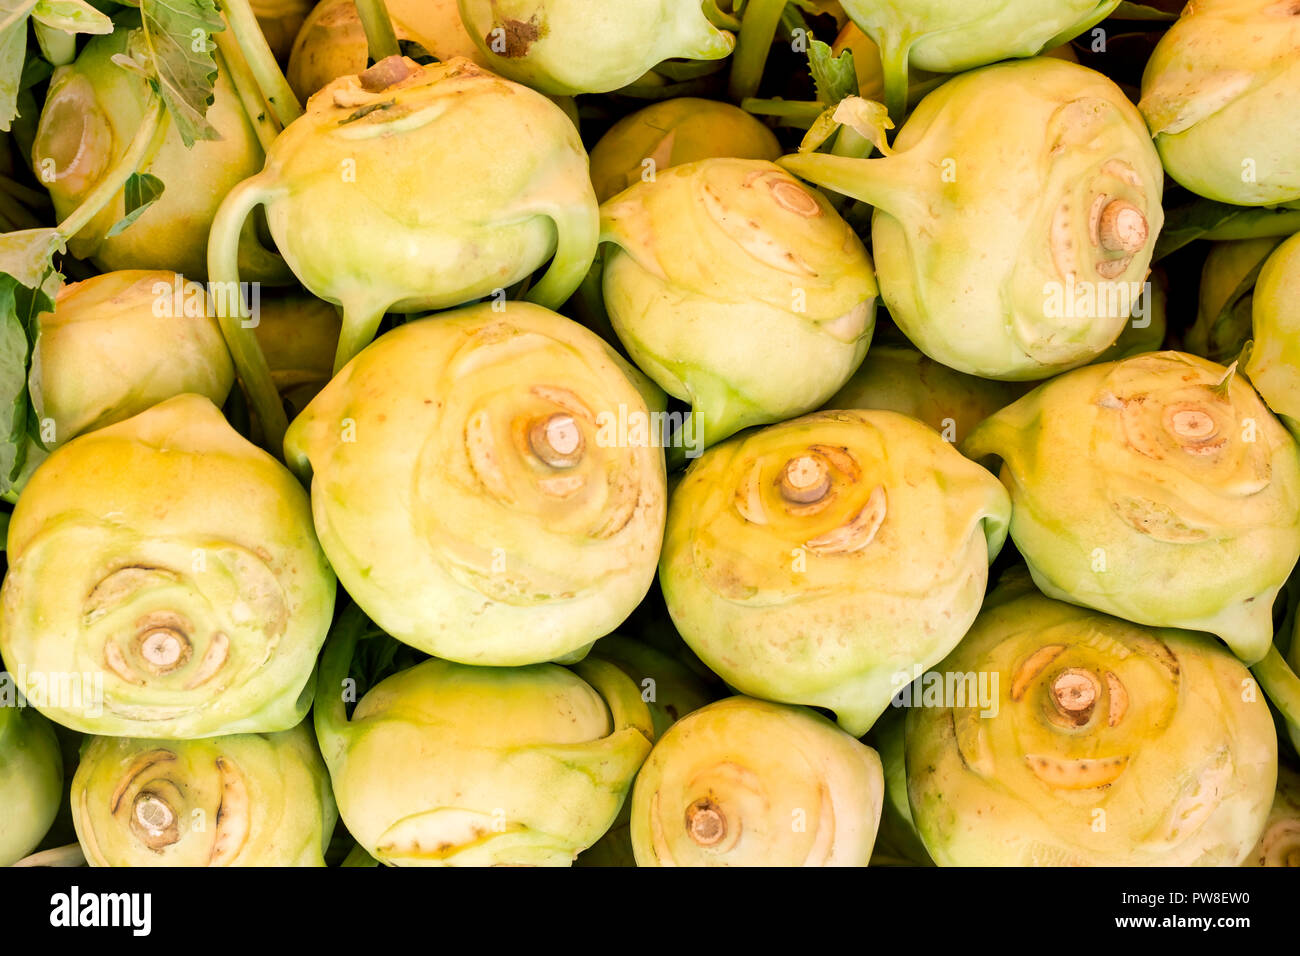 Close up shot of Kohlrabi stems (also called german turnip) Stock Photo